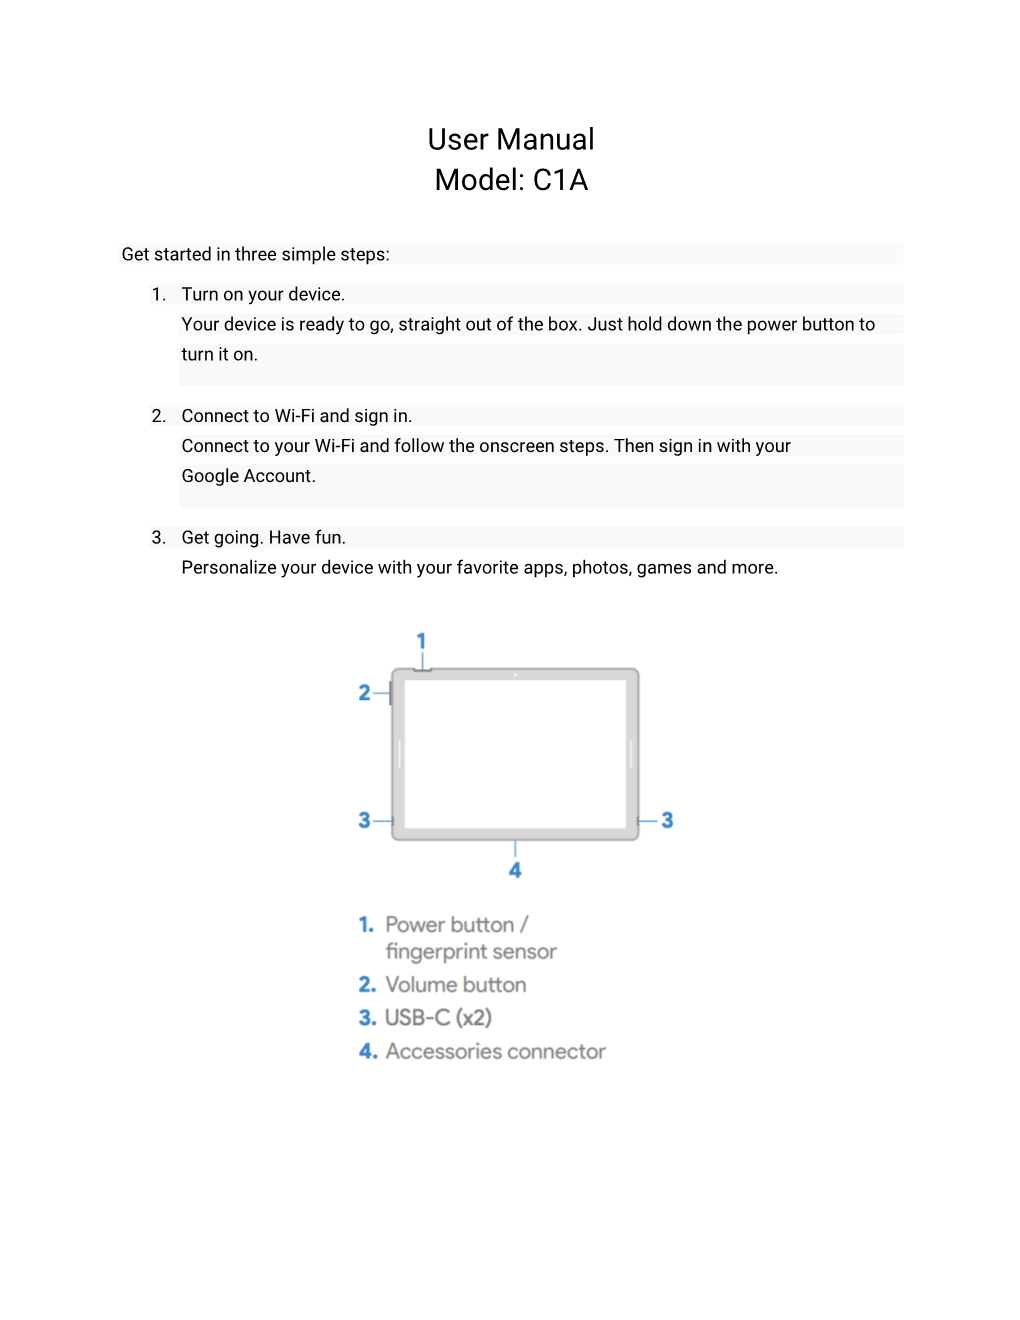 User Manual Model: C1A